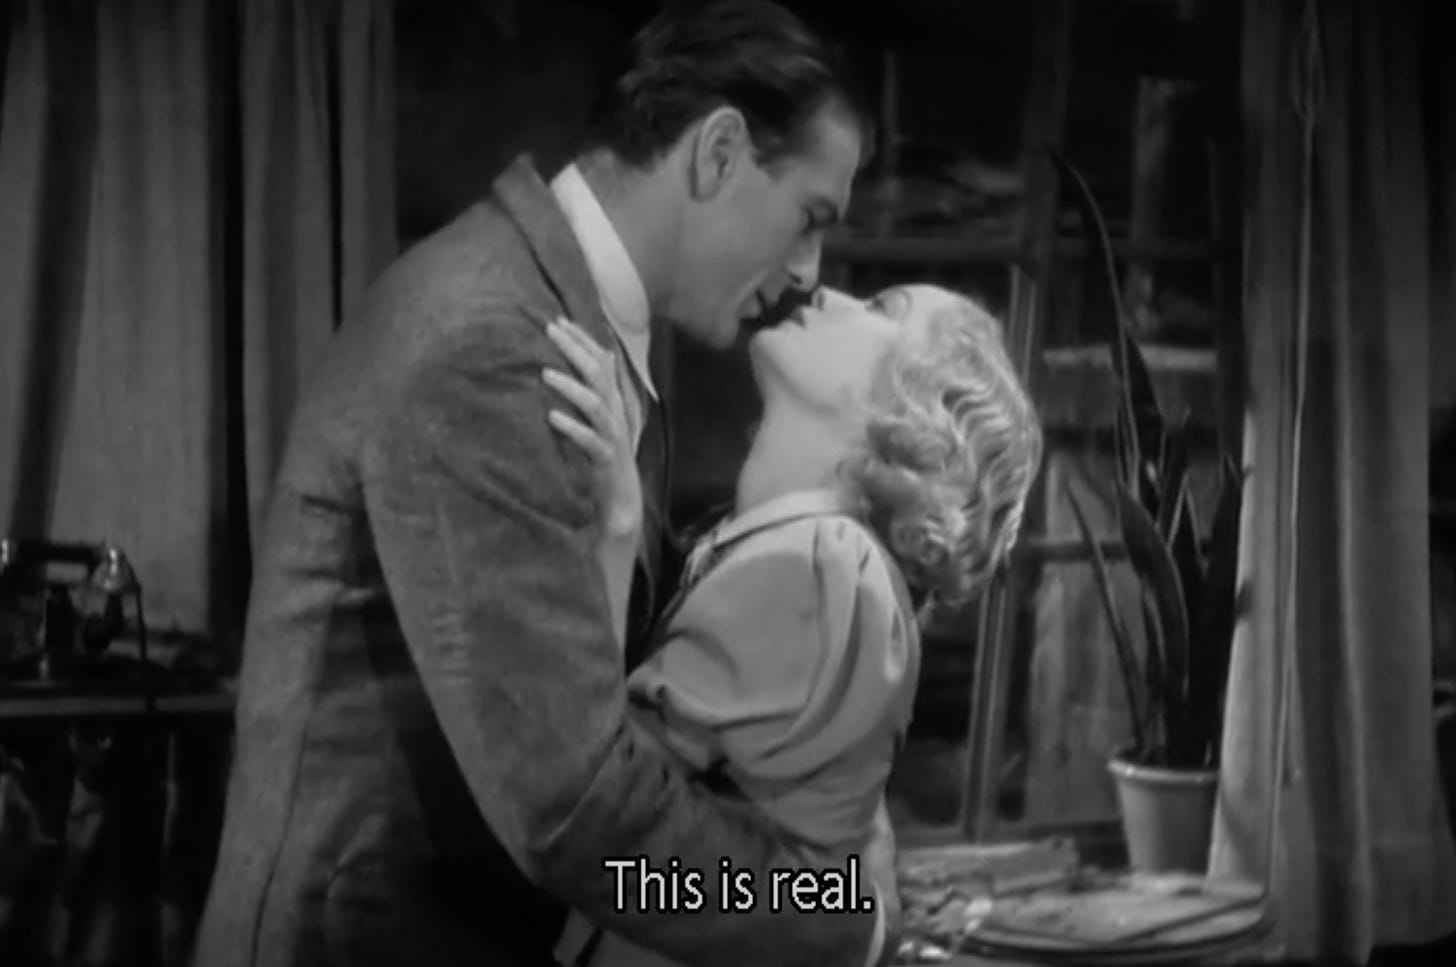 Gary Cooper embracing Marlene Dietrich in "Morocco" (1930)